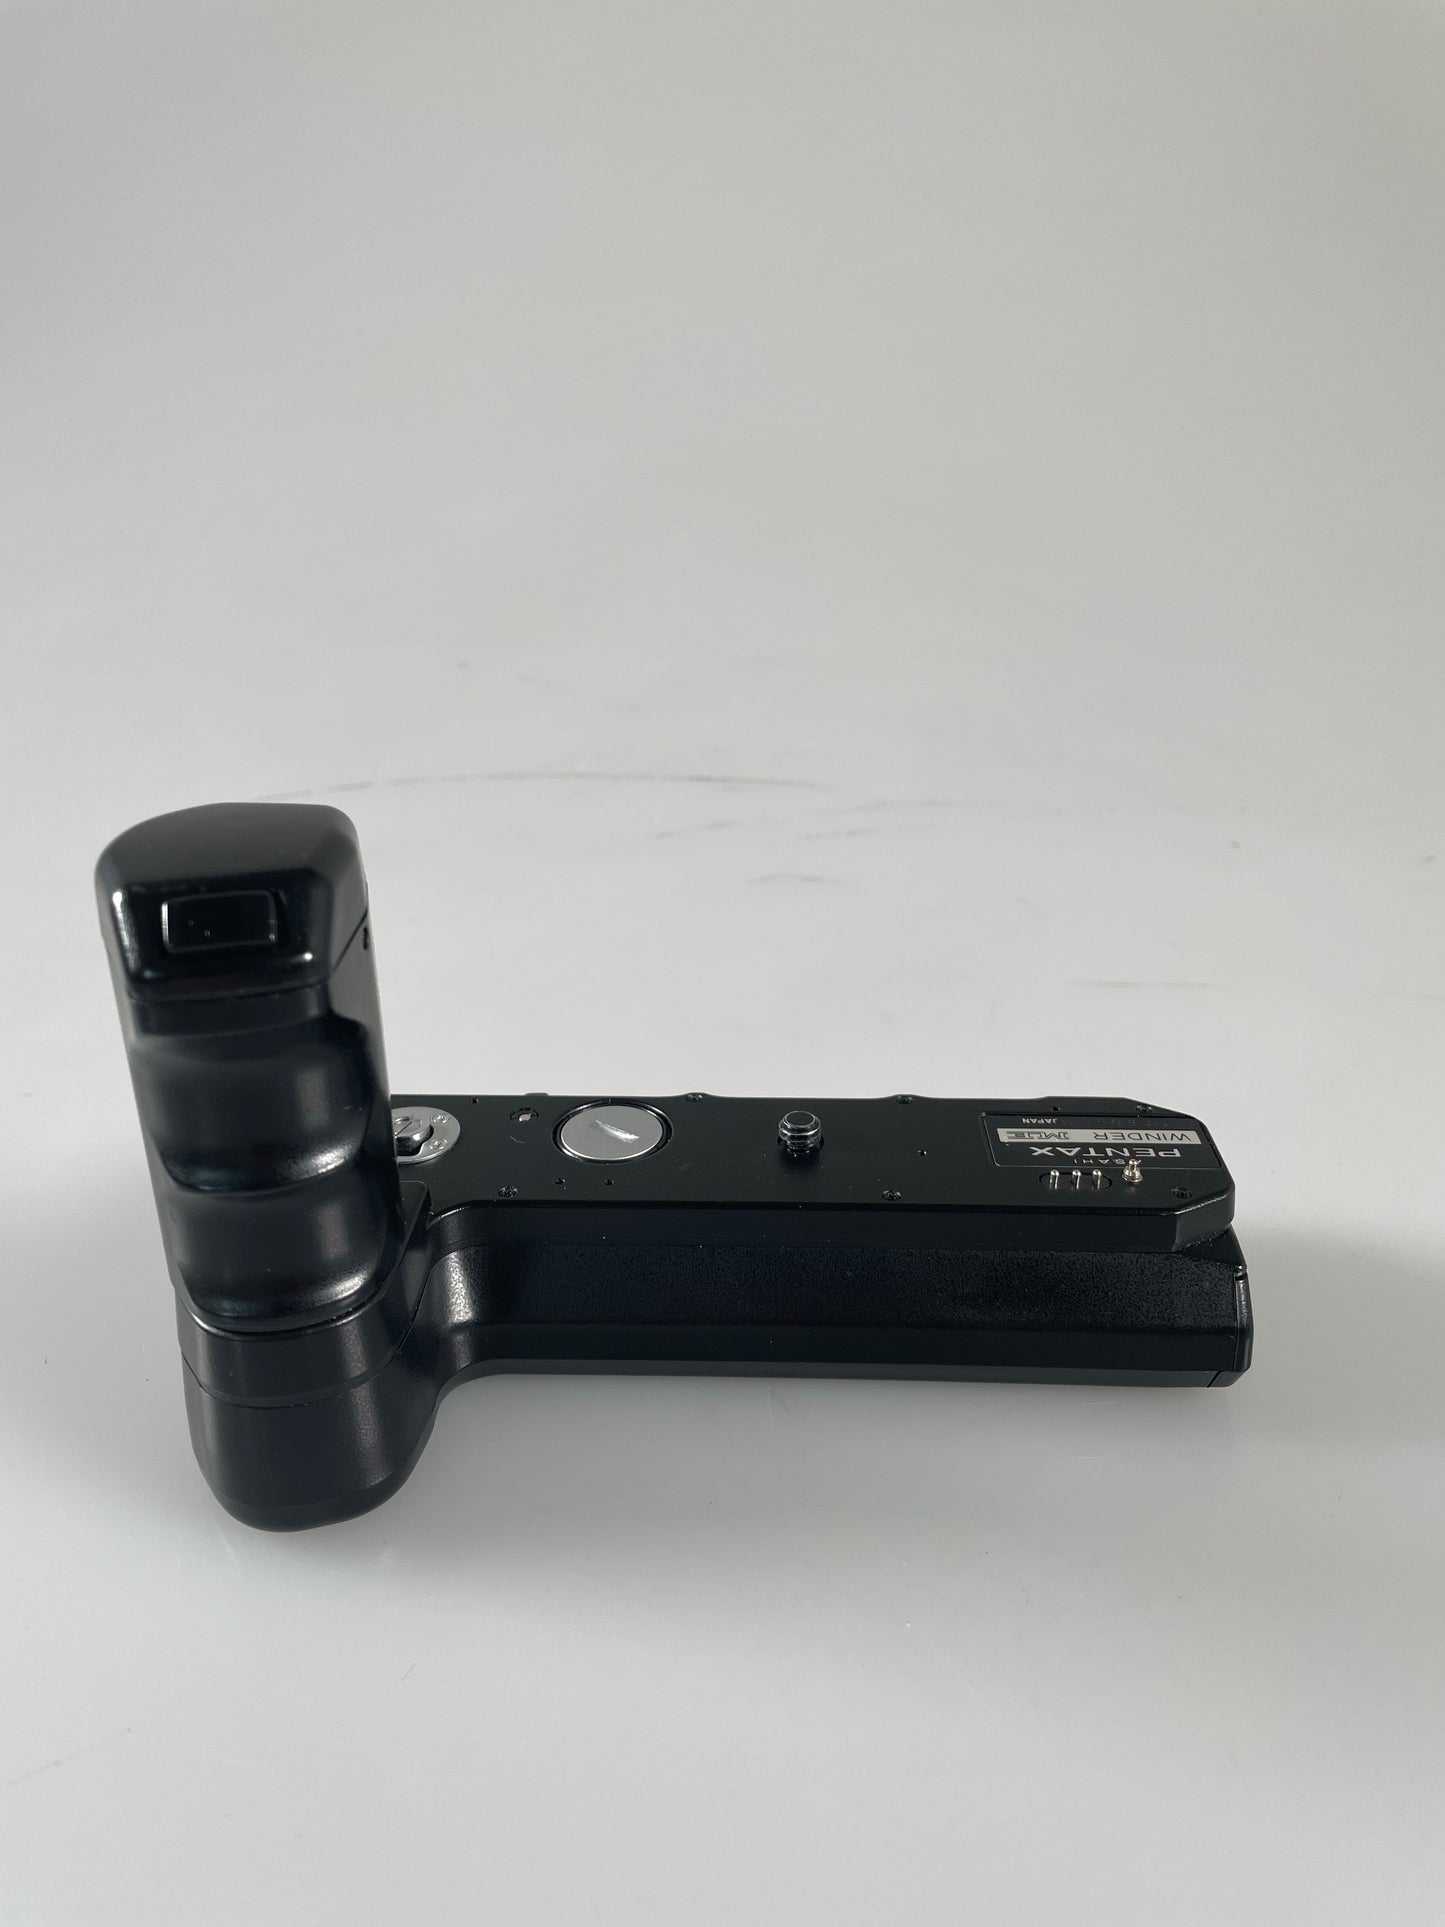 Pentax ME winder battery grip for Pentax ME series cameras